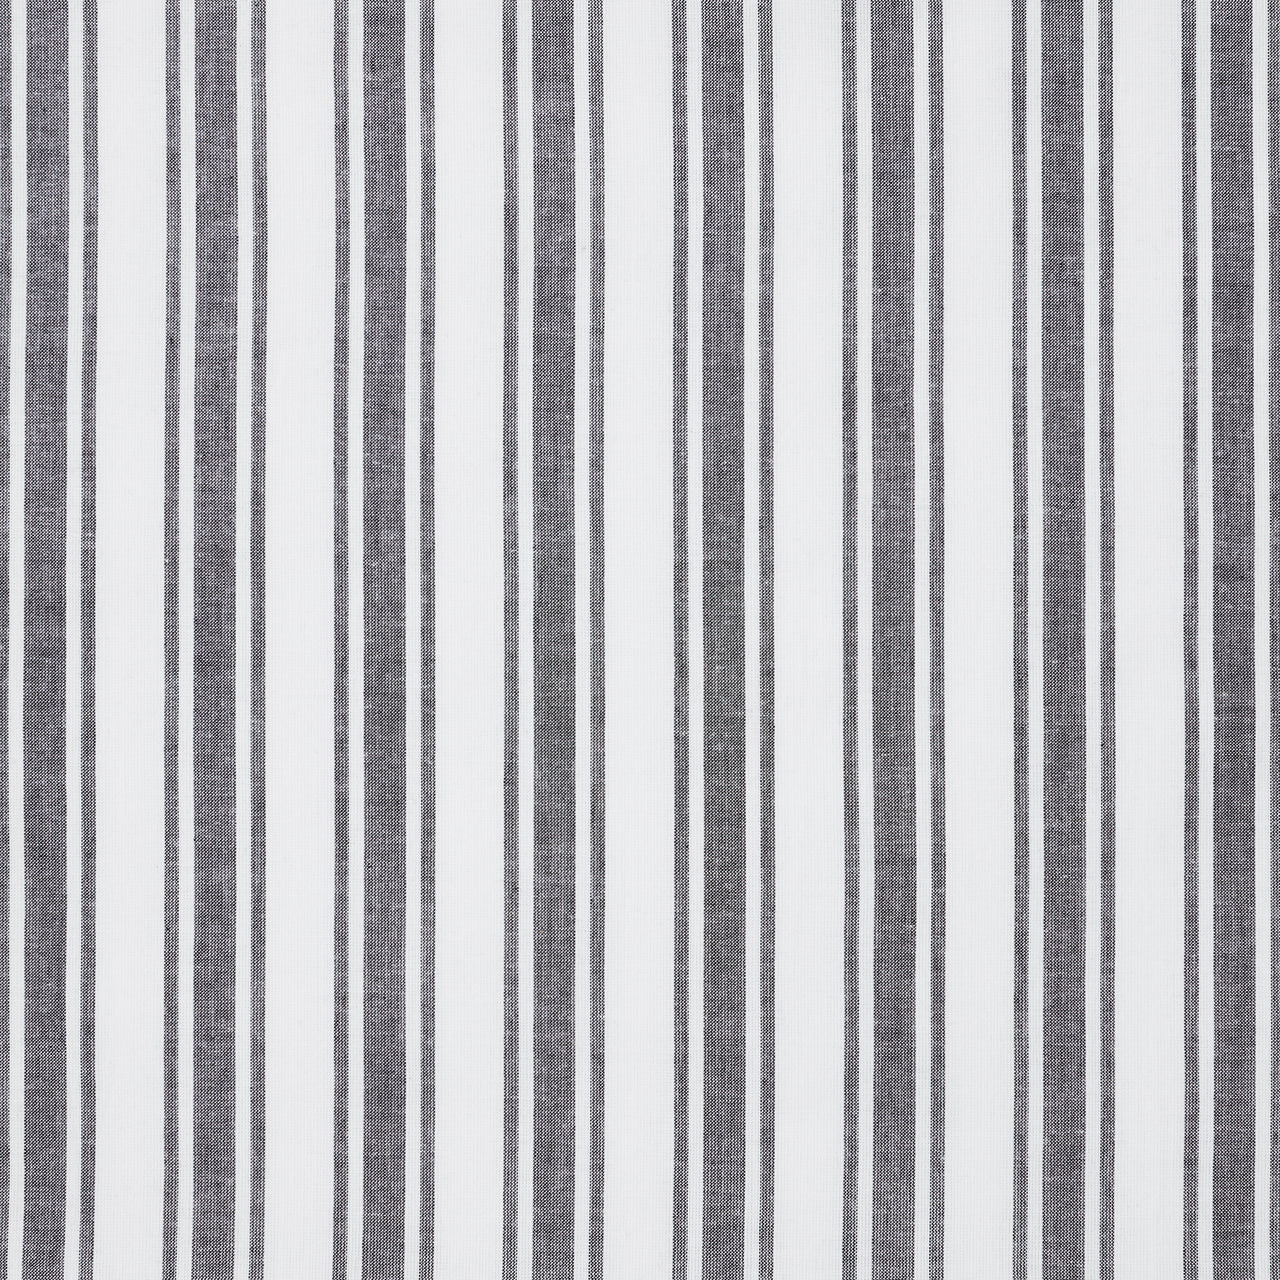 Sawyer Mill Black Ticking Stripe Prairie Swag Set of 2 36x36x18 VHC Brands